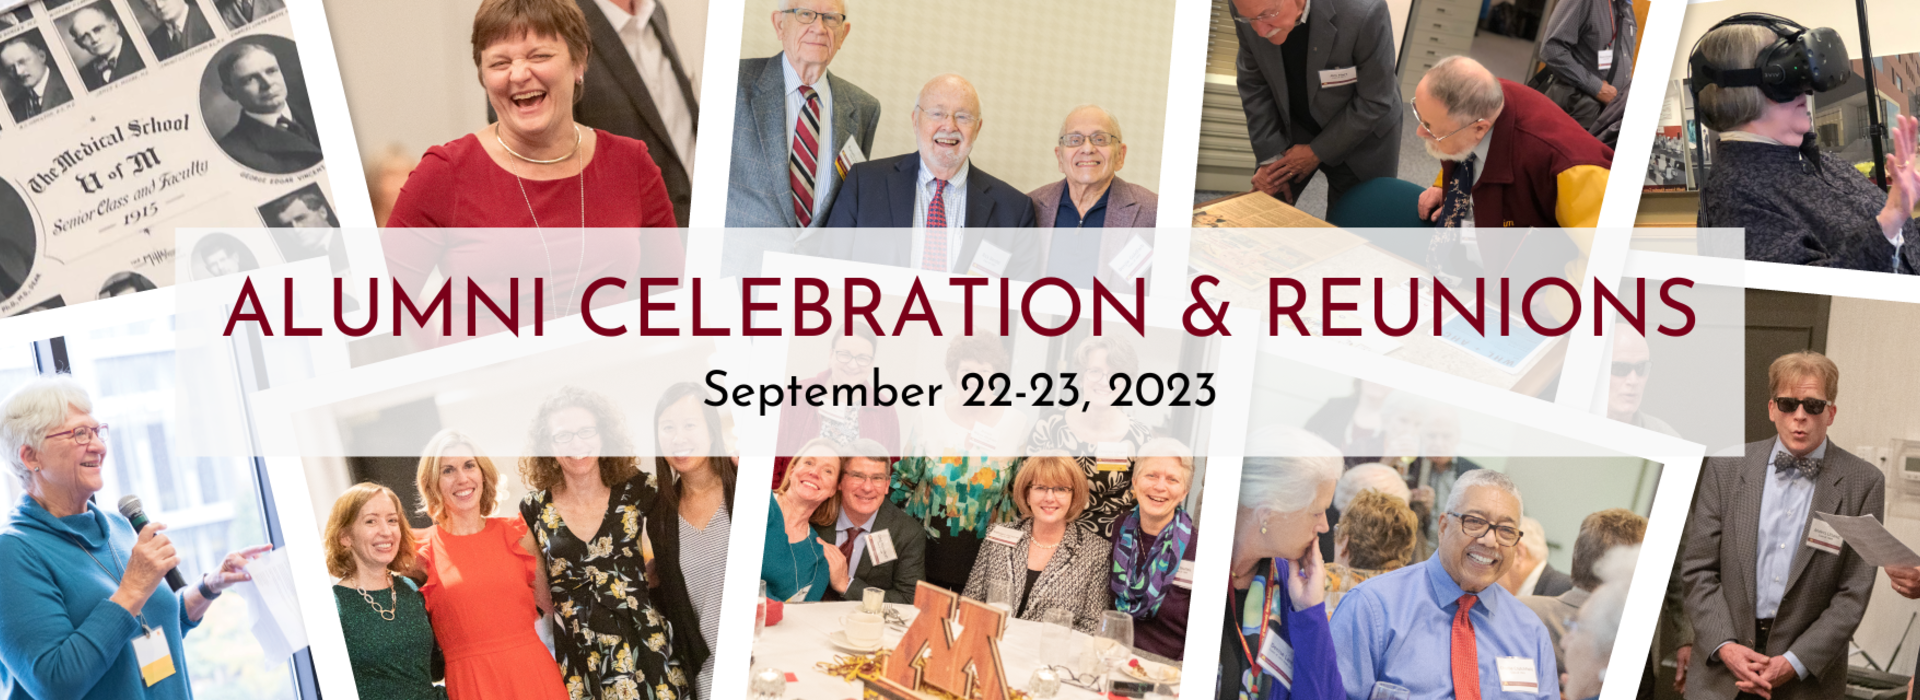 Photos of alumni enjoying themselves, Alumni Celebration & Reunions September 22-23, 2023